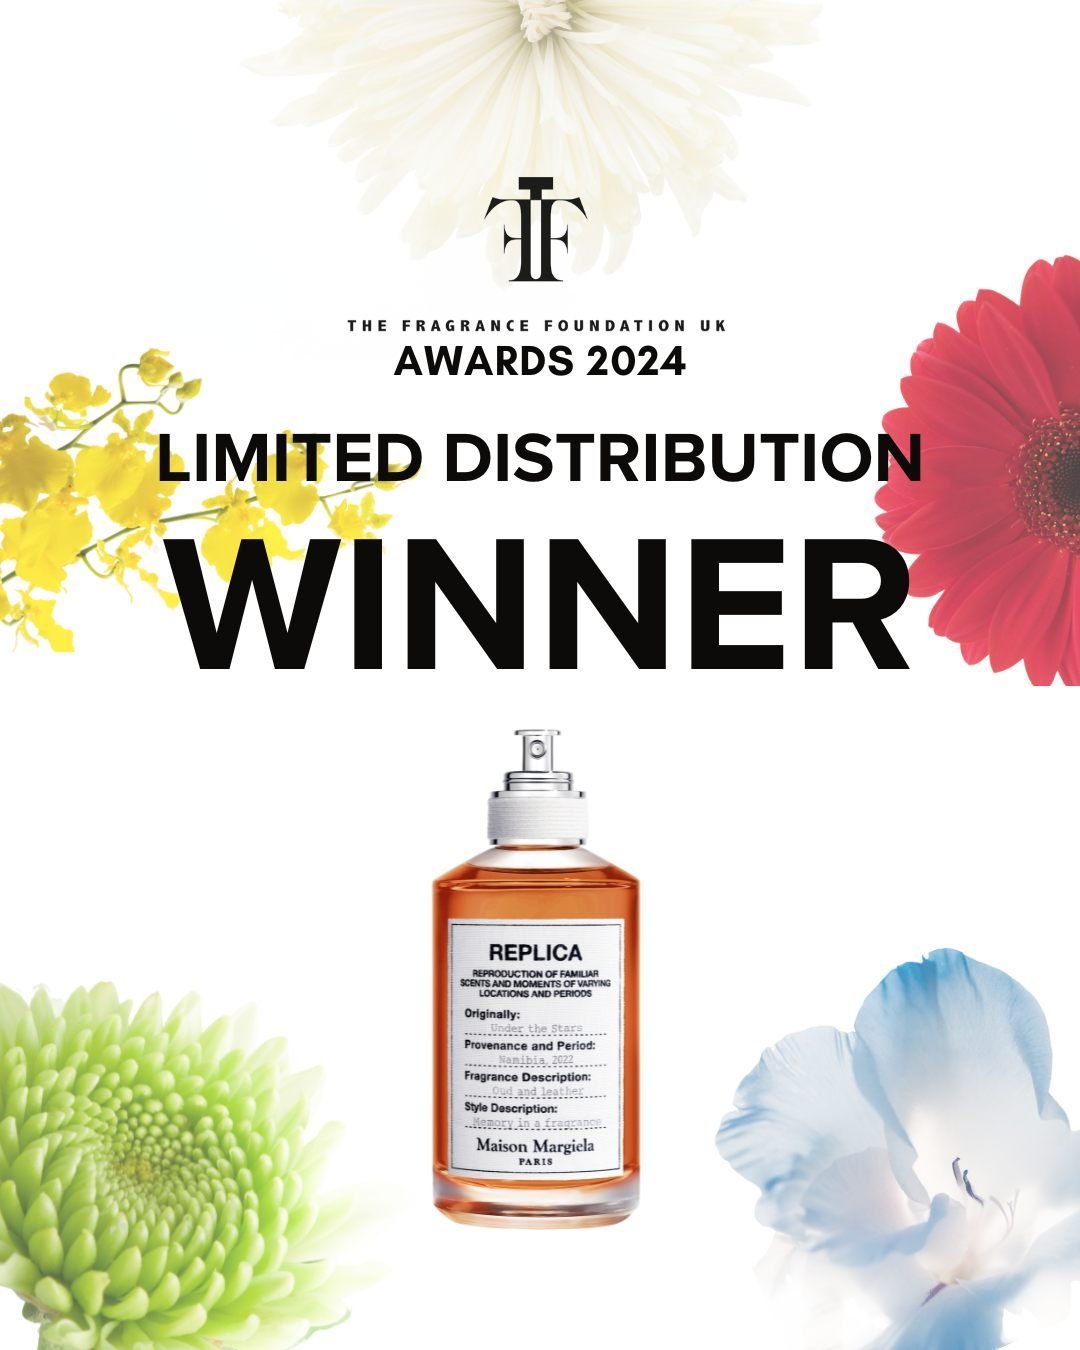 Winner of The Fragrance Foundation UK Best New Fragrance in Limited Distribution Award...
@MaisonMargielaFragrances &ndash; Replica Under The Stars! Congratulations!

#TFFAwards2024 #Winner #FragranceAwards #Fragrance #FragranceLover #FragranceCelebr